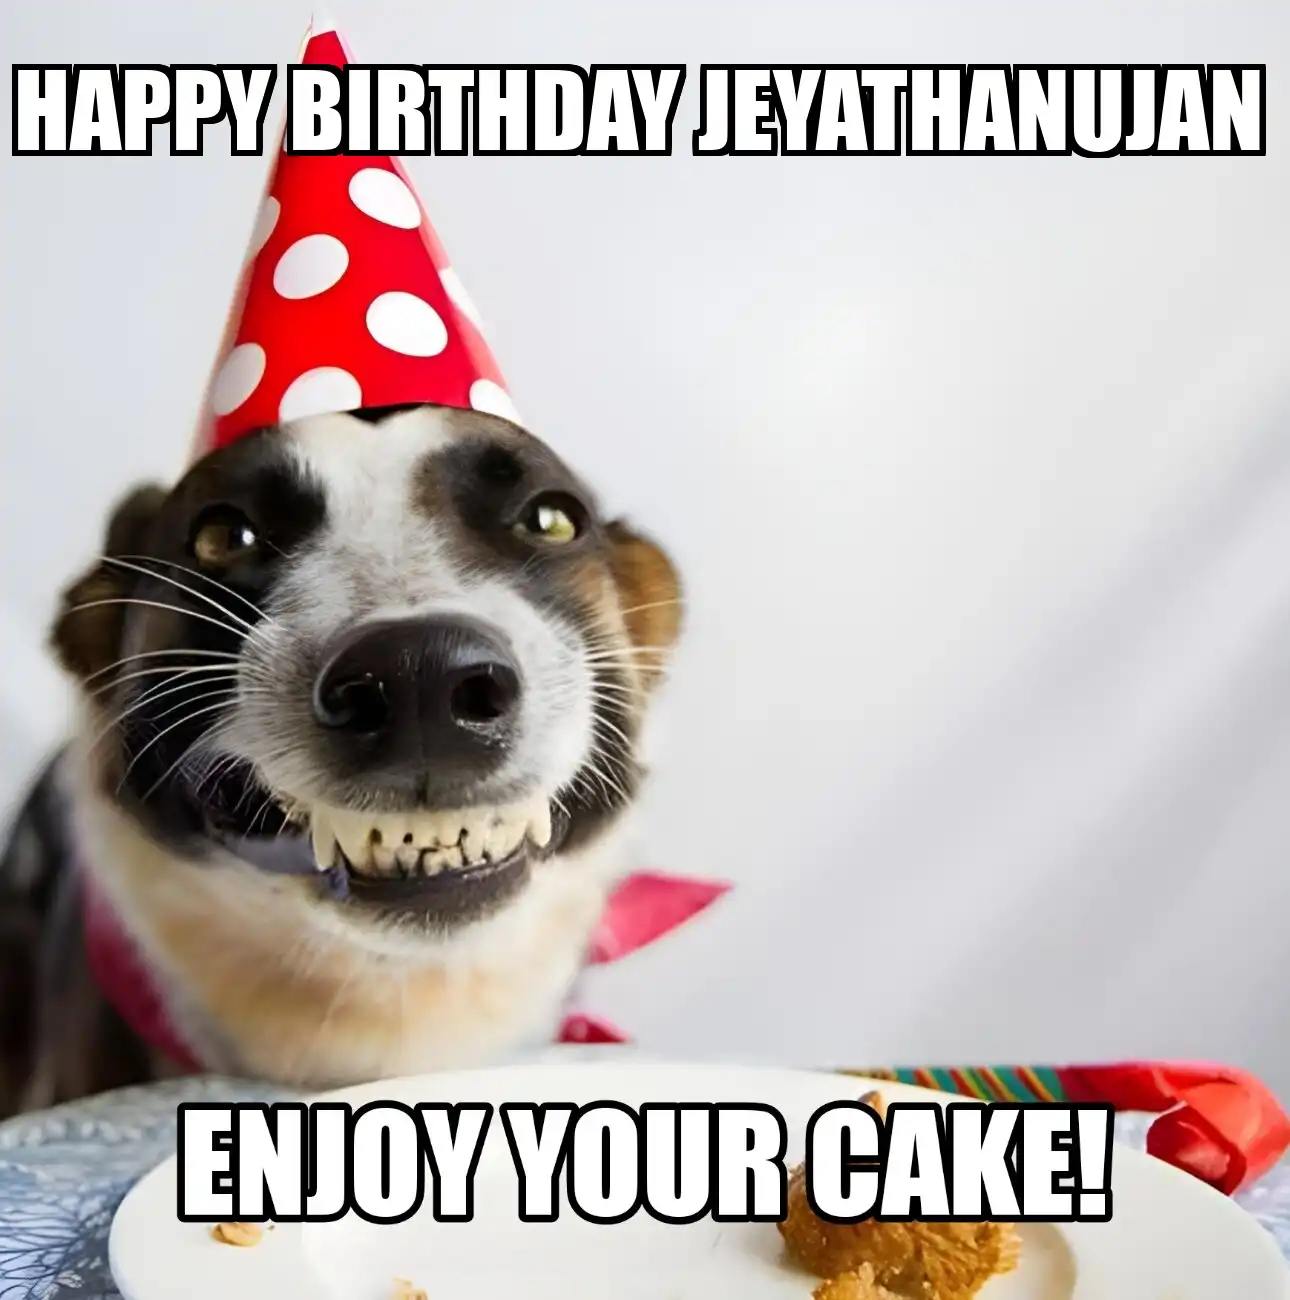 Happy Birthday Jeyathanujan Enjoy Your Cake Dog Meme